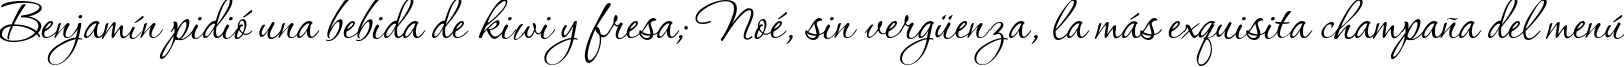 Пример написания шрифтом Corinthia текста на испанском